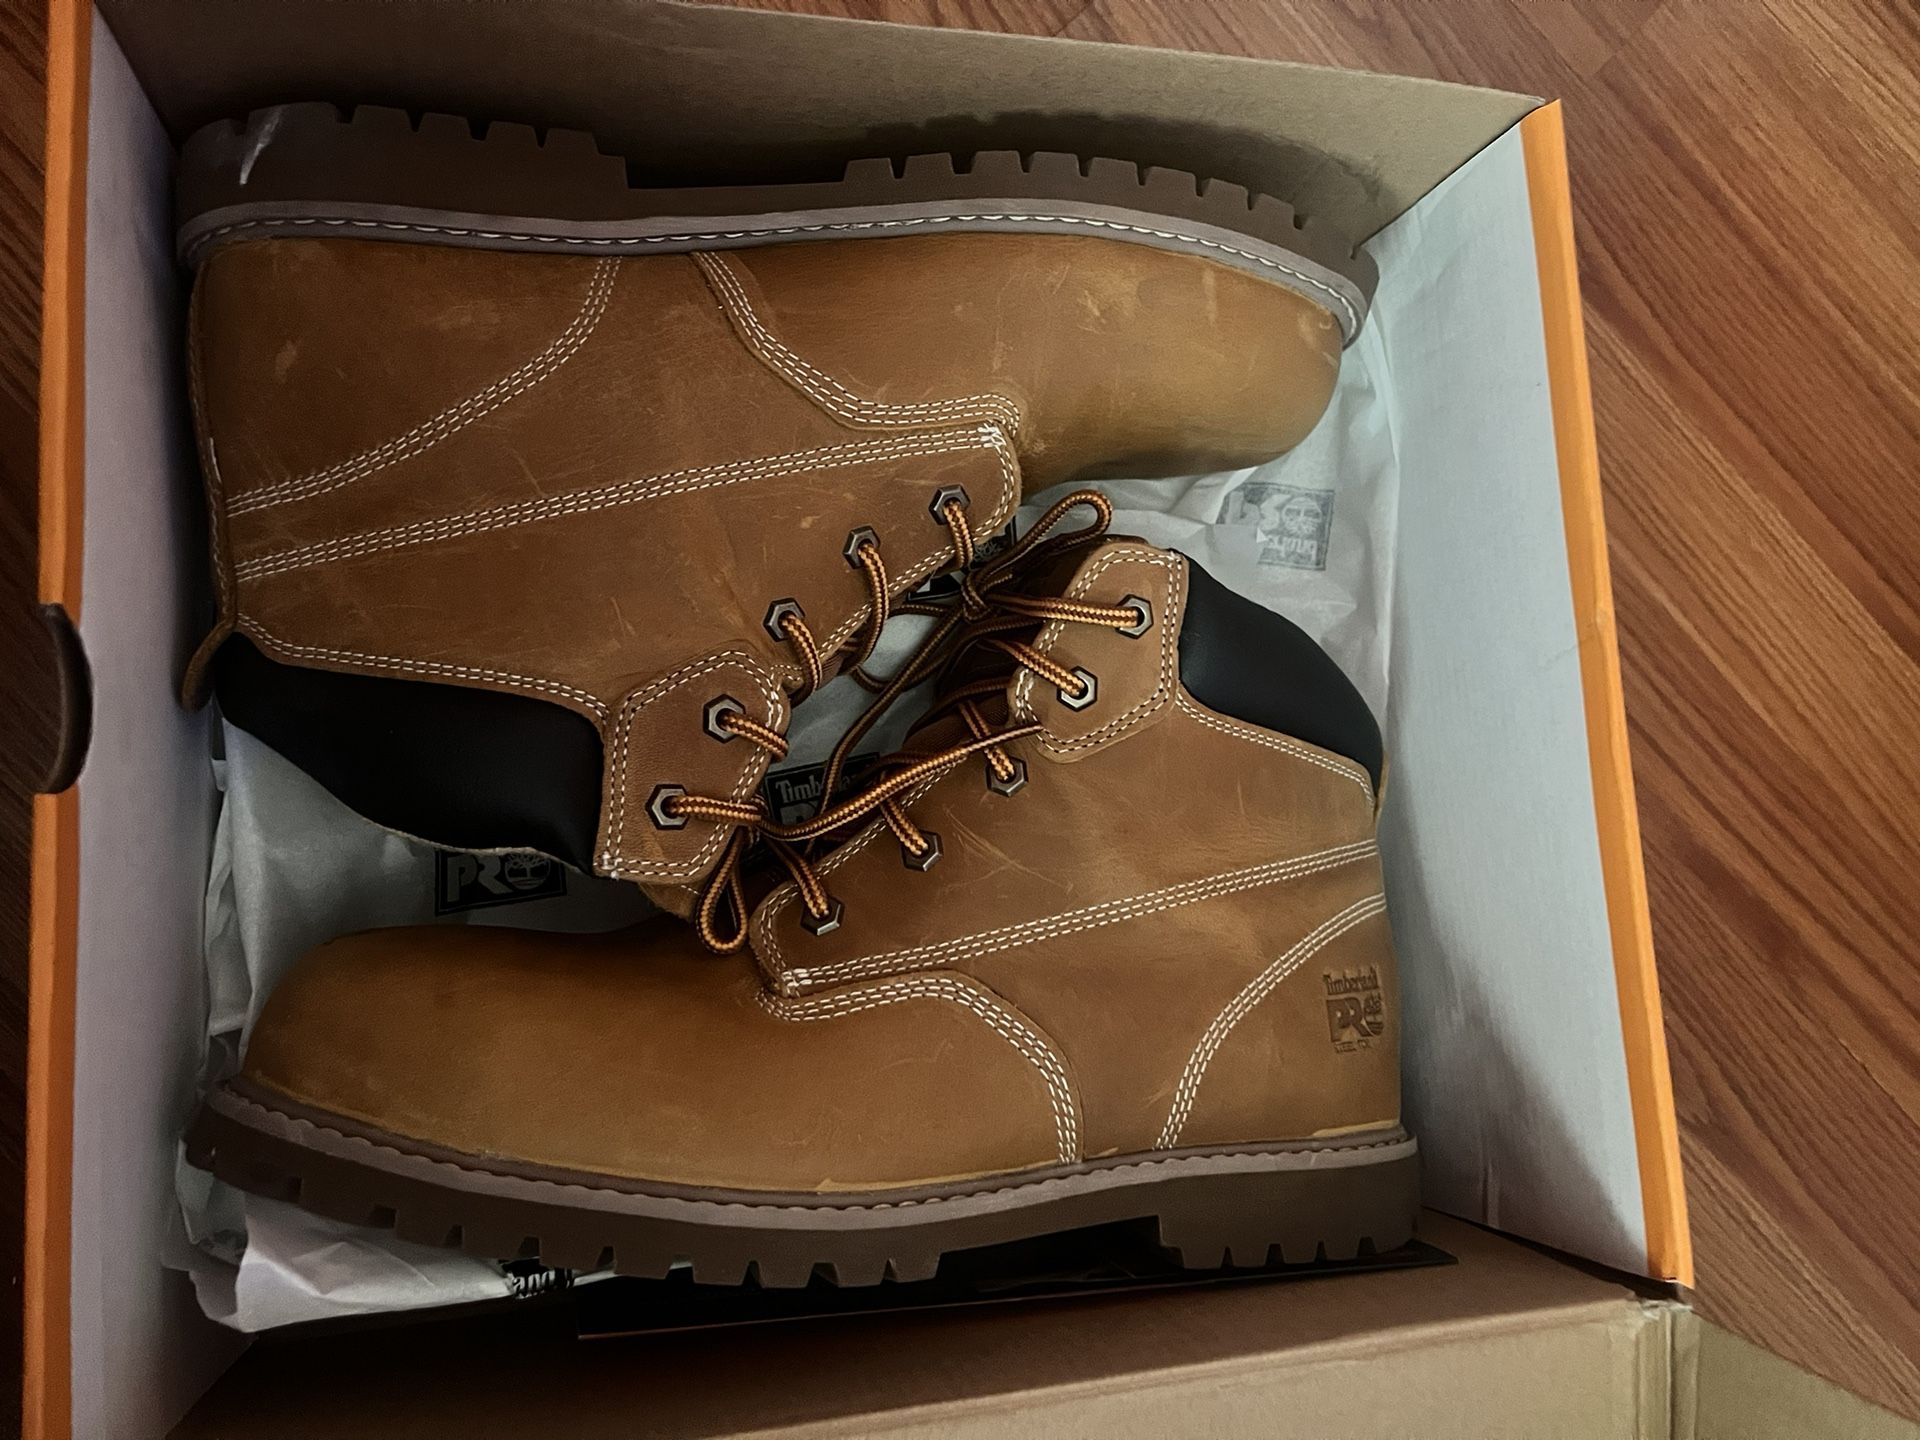 Timberland PR boots 